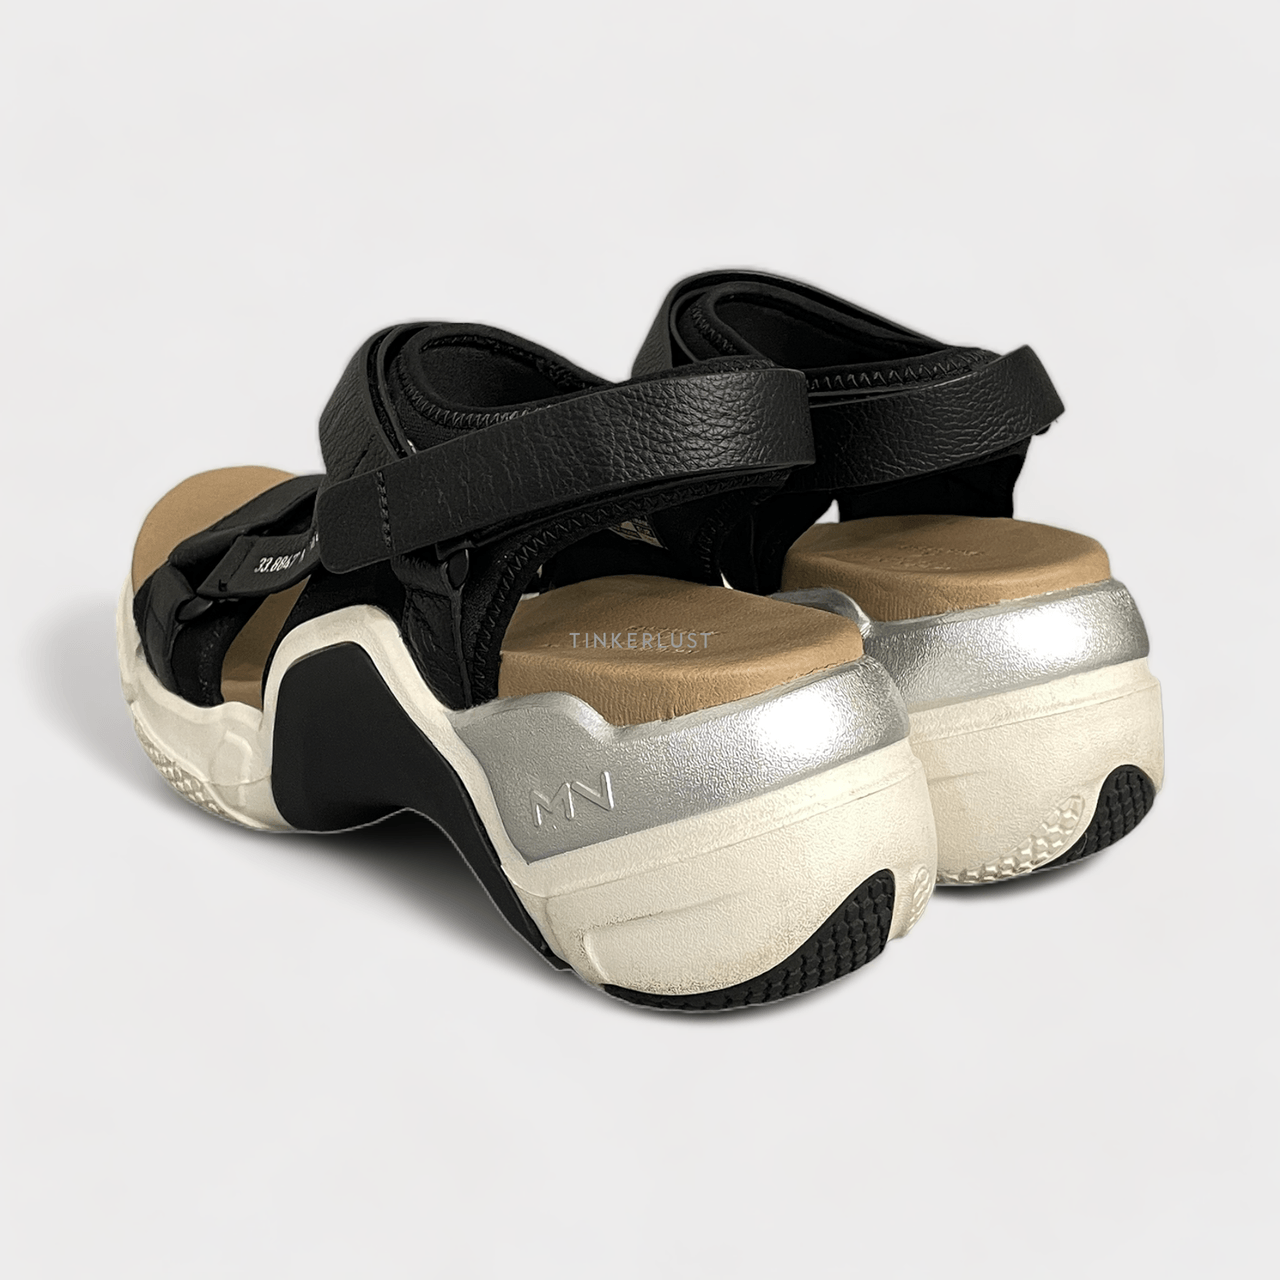 Skechers X Mark Nason Neo Block Didi Black Sandals